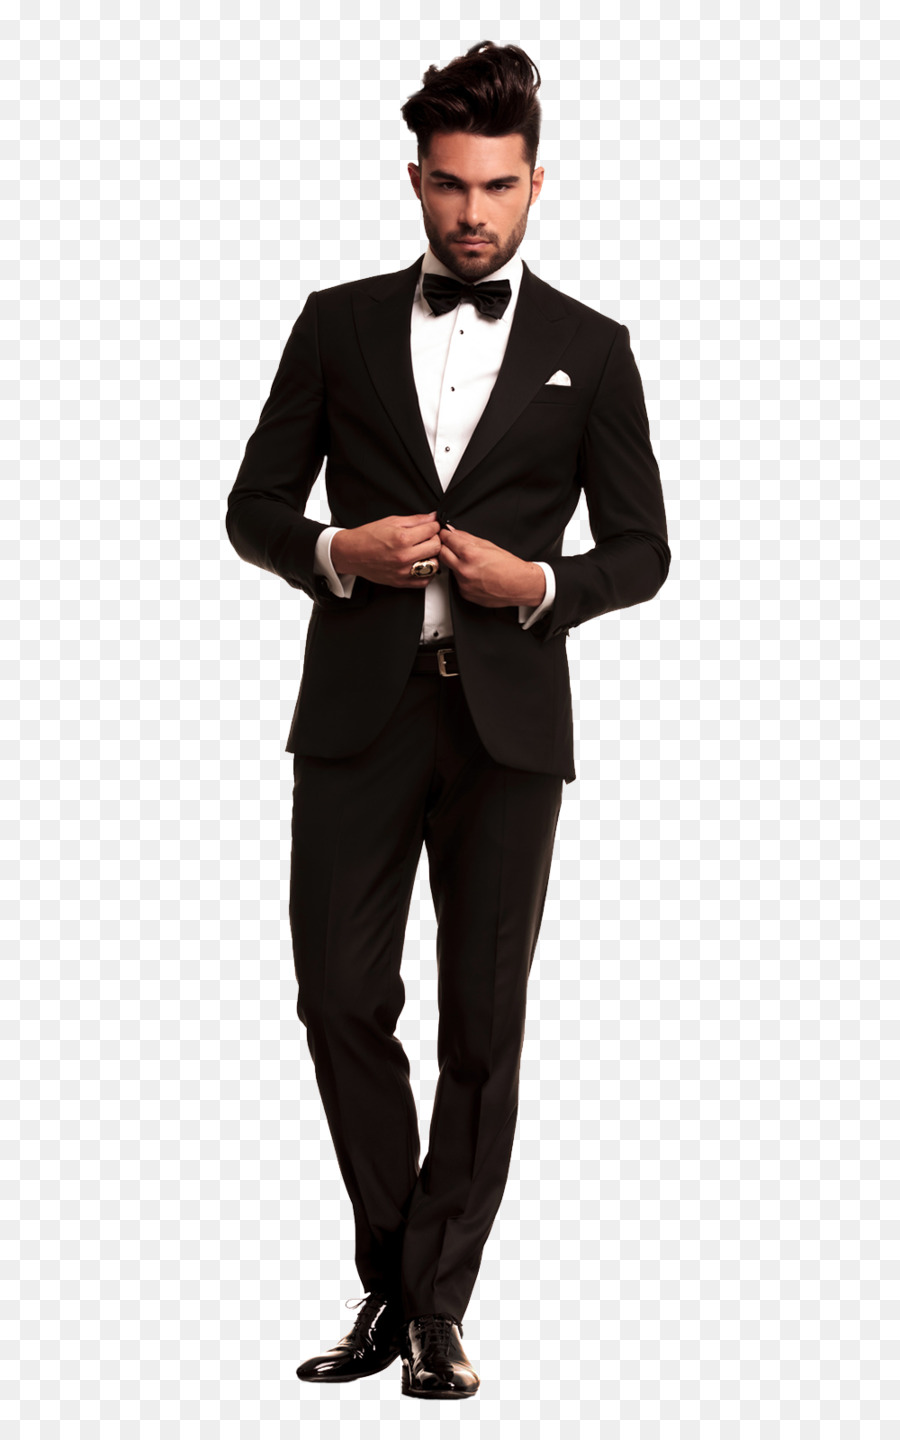 Tuxedo Stock-Fotografie Mantel - Anzug und Krawatte